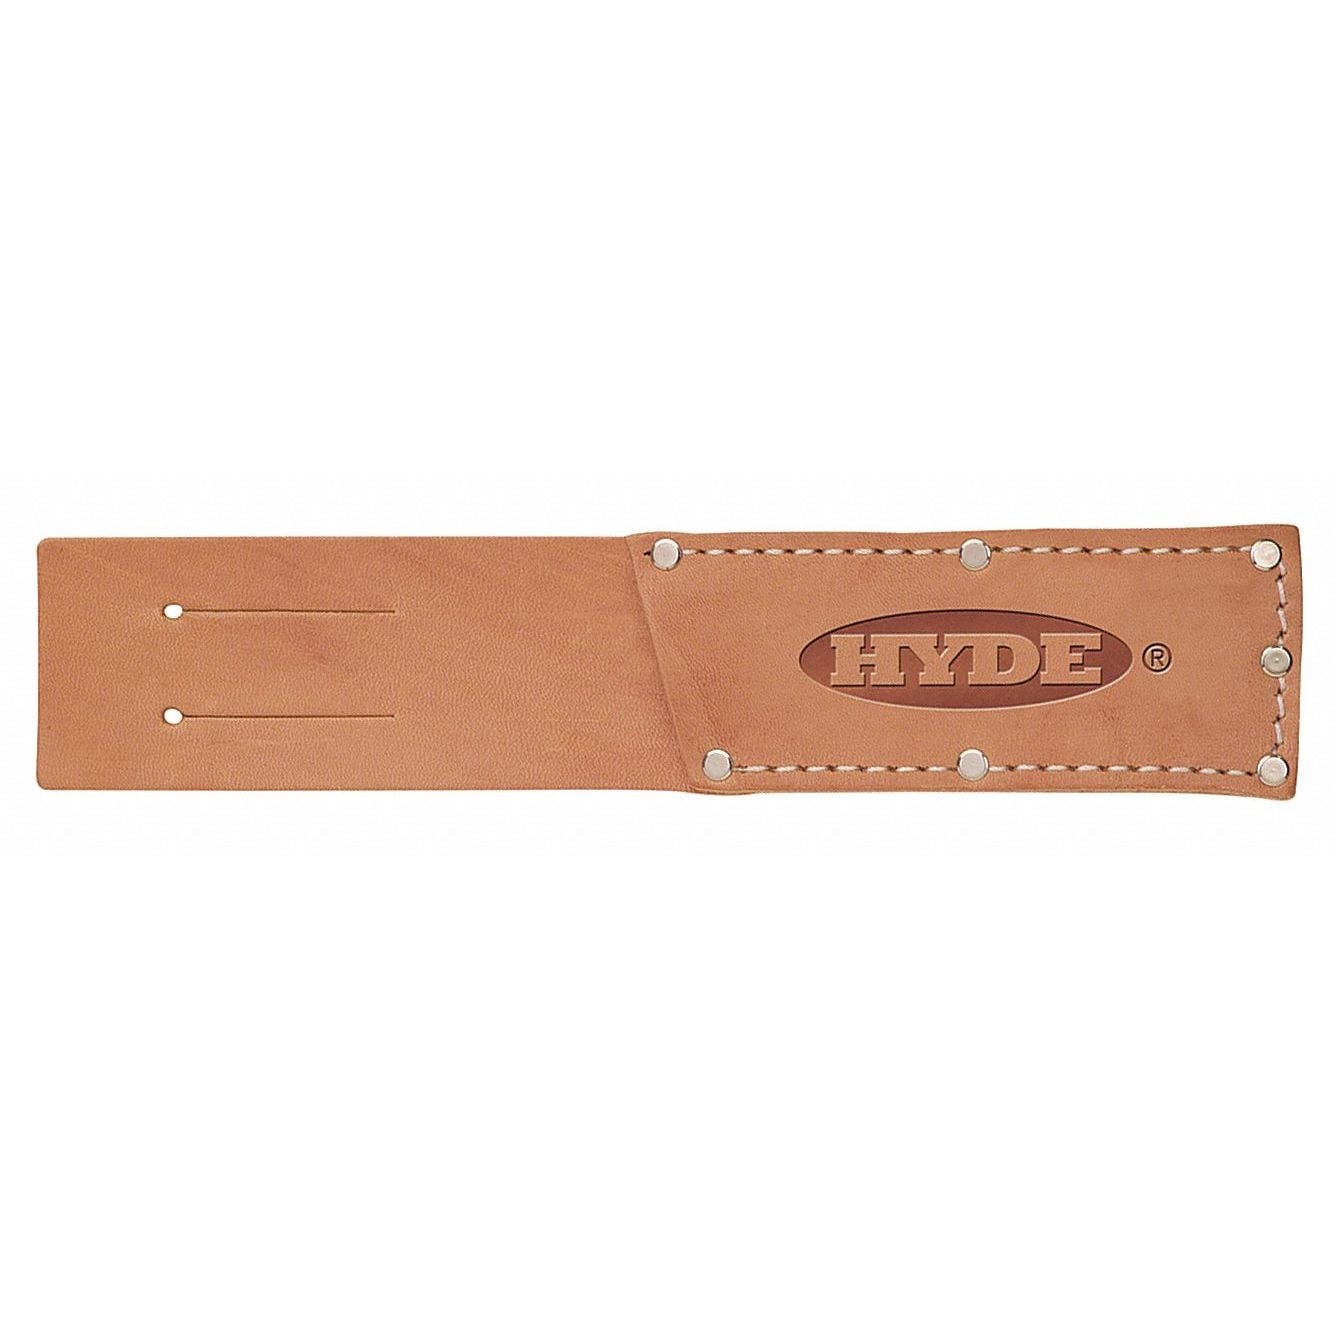 Hyde Tan,Tool Sheath,Synthetic Leather 56500 - 1 Each